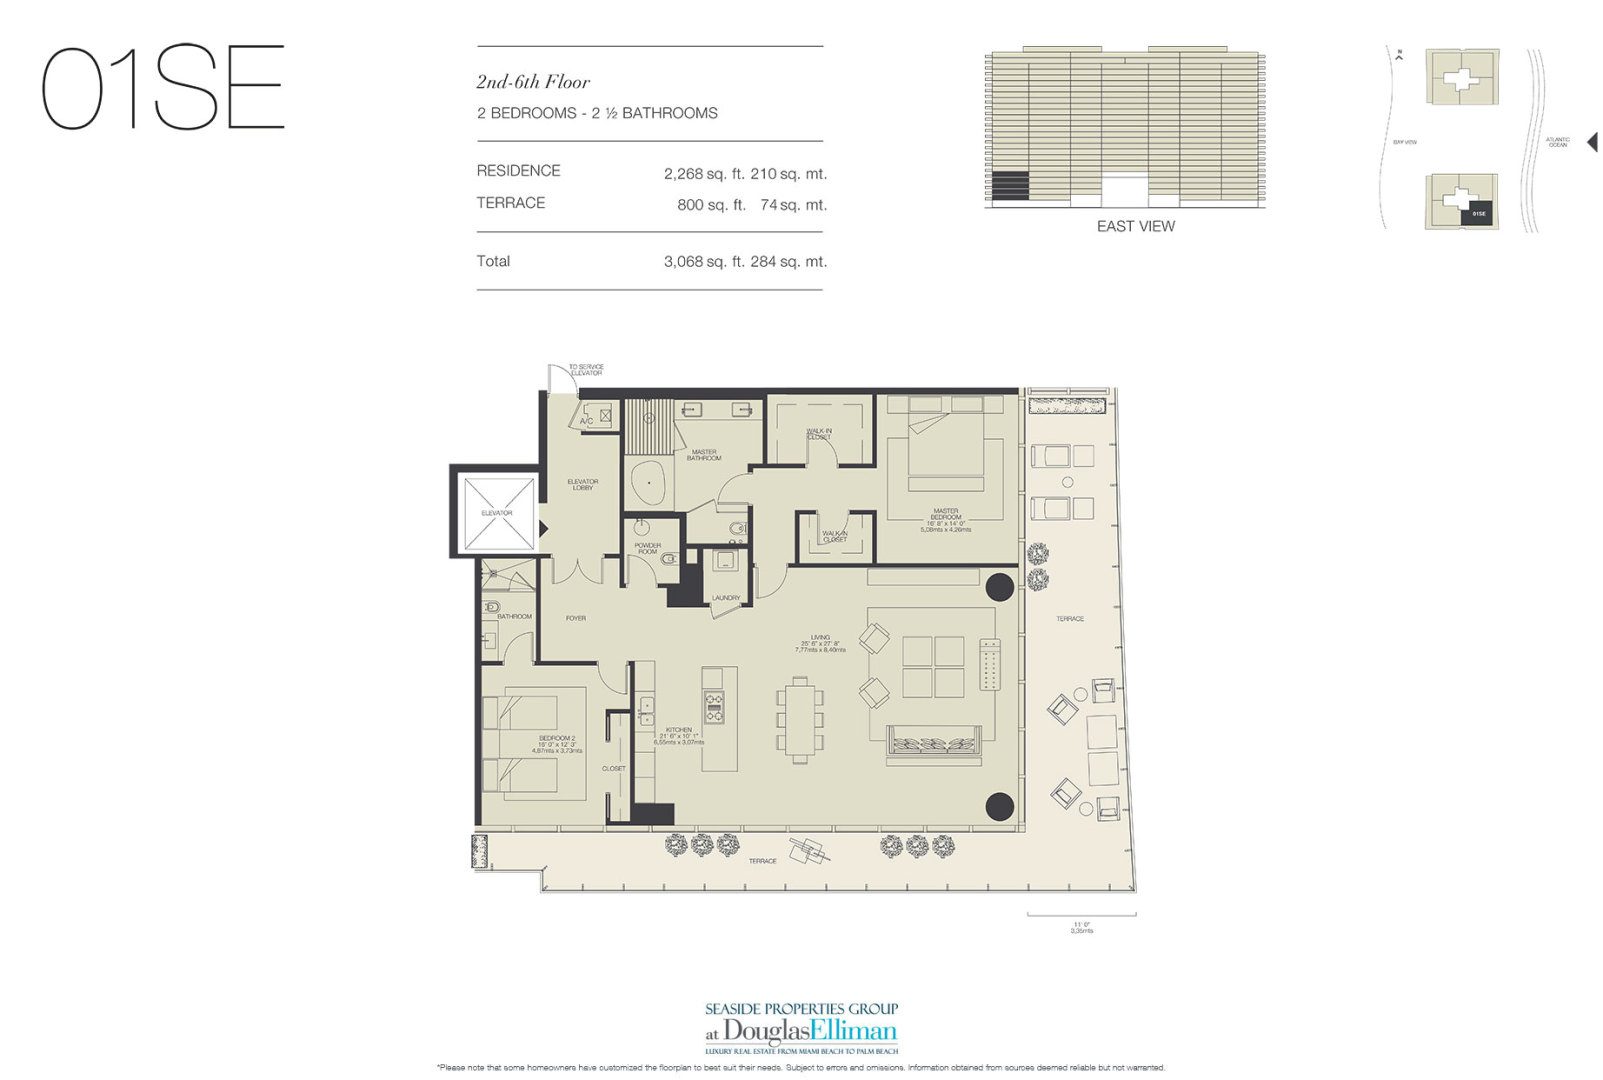 The 01SE Floorplan for Oceana Bal Harbour, Luxury Oceanfront Condos in Bal Harbour, Florida 33154